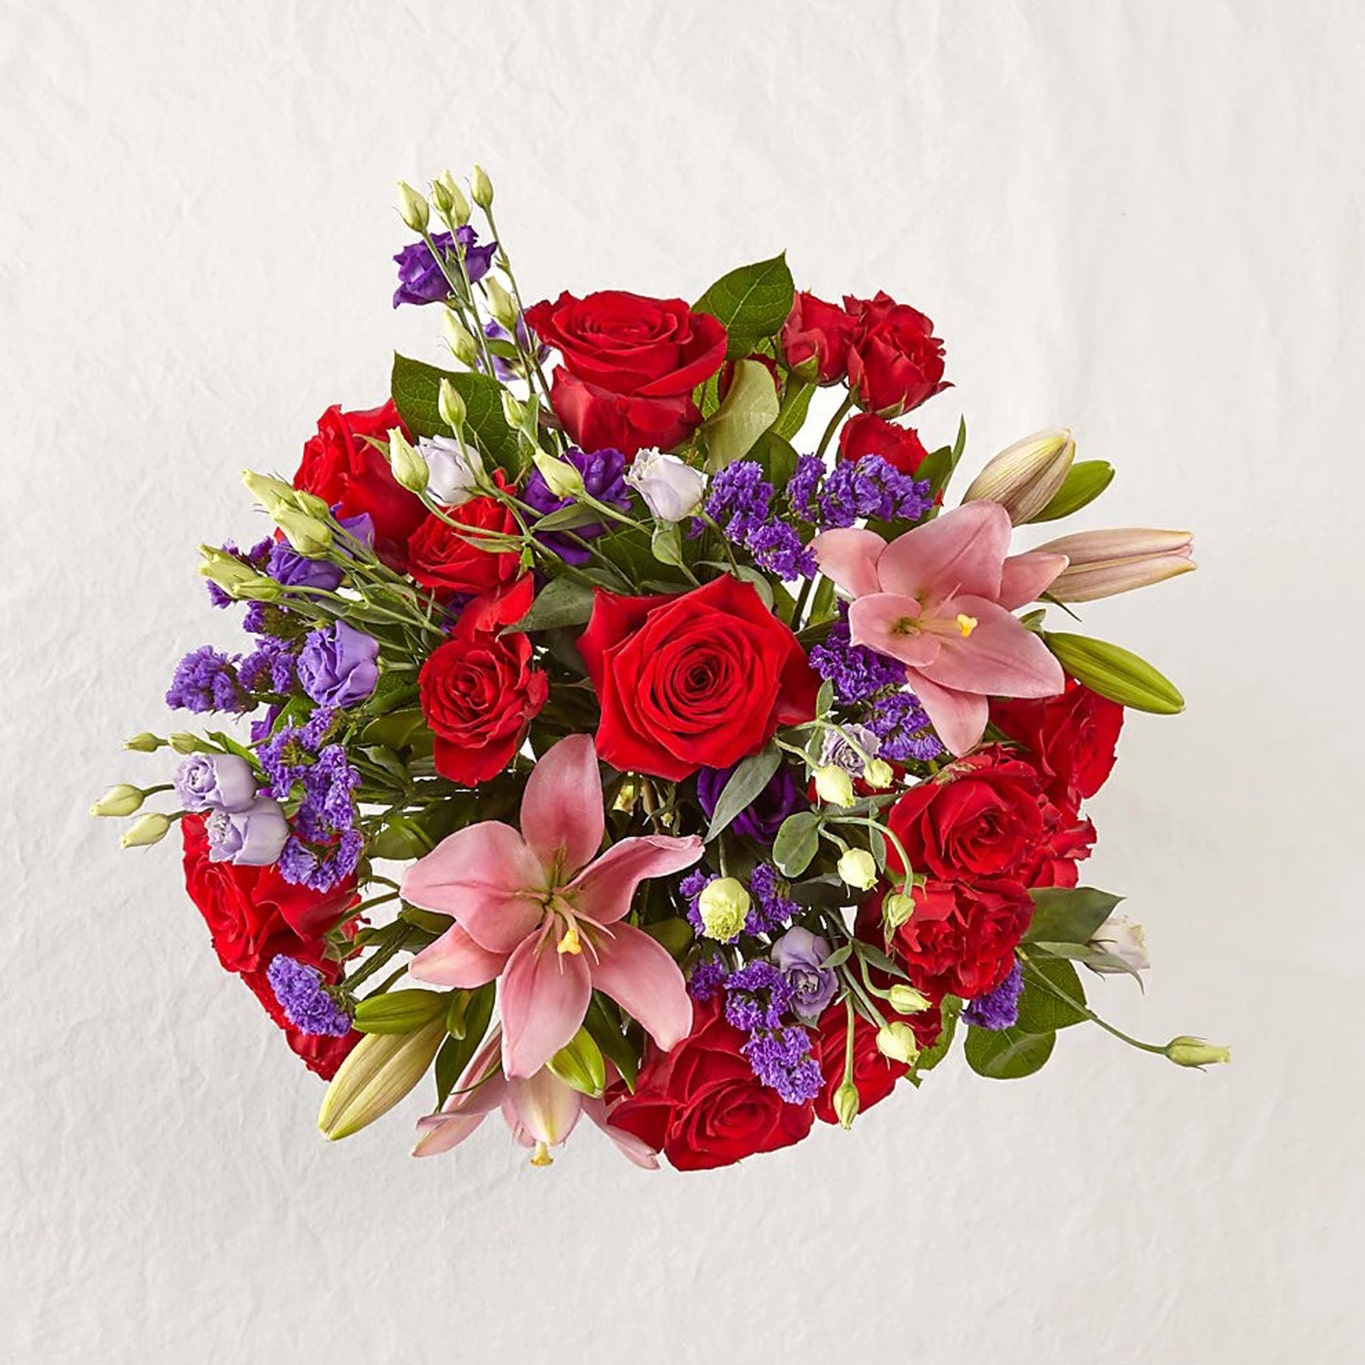 75 Pastel Pink Roses - Fresh Flowers For Birthdays, Weddings or Anniversary